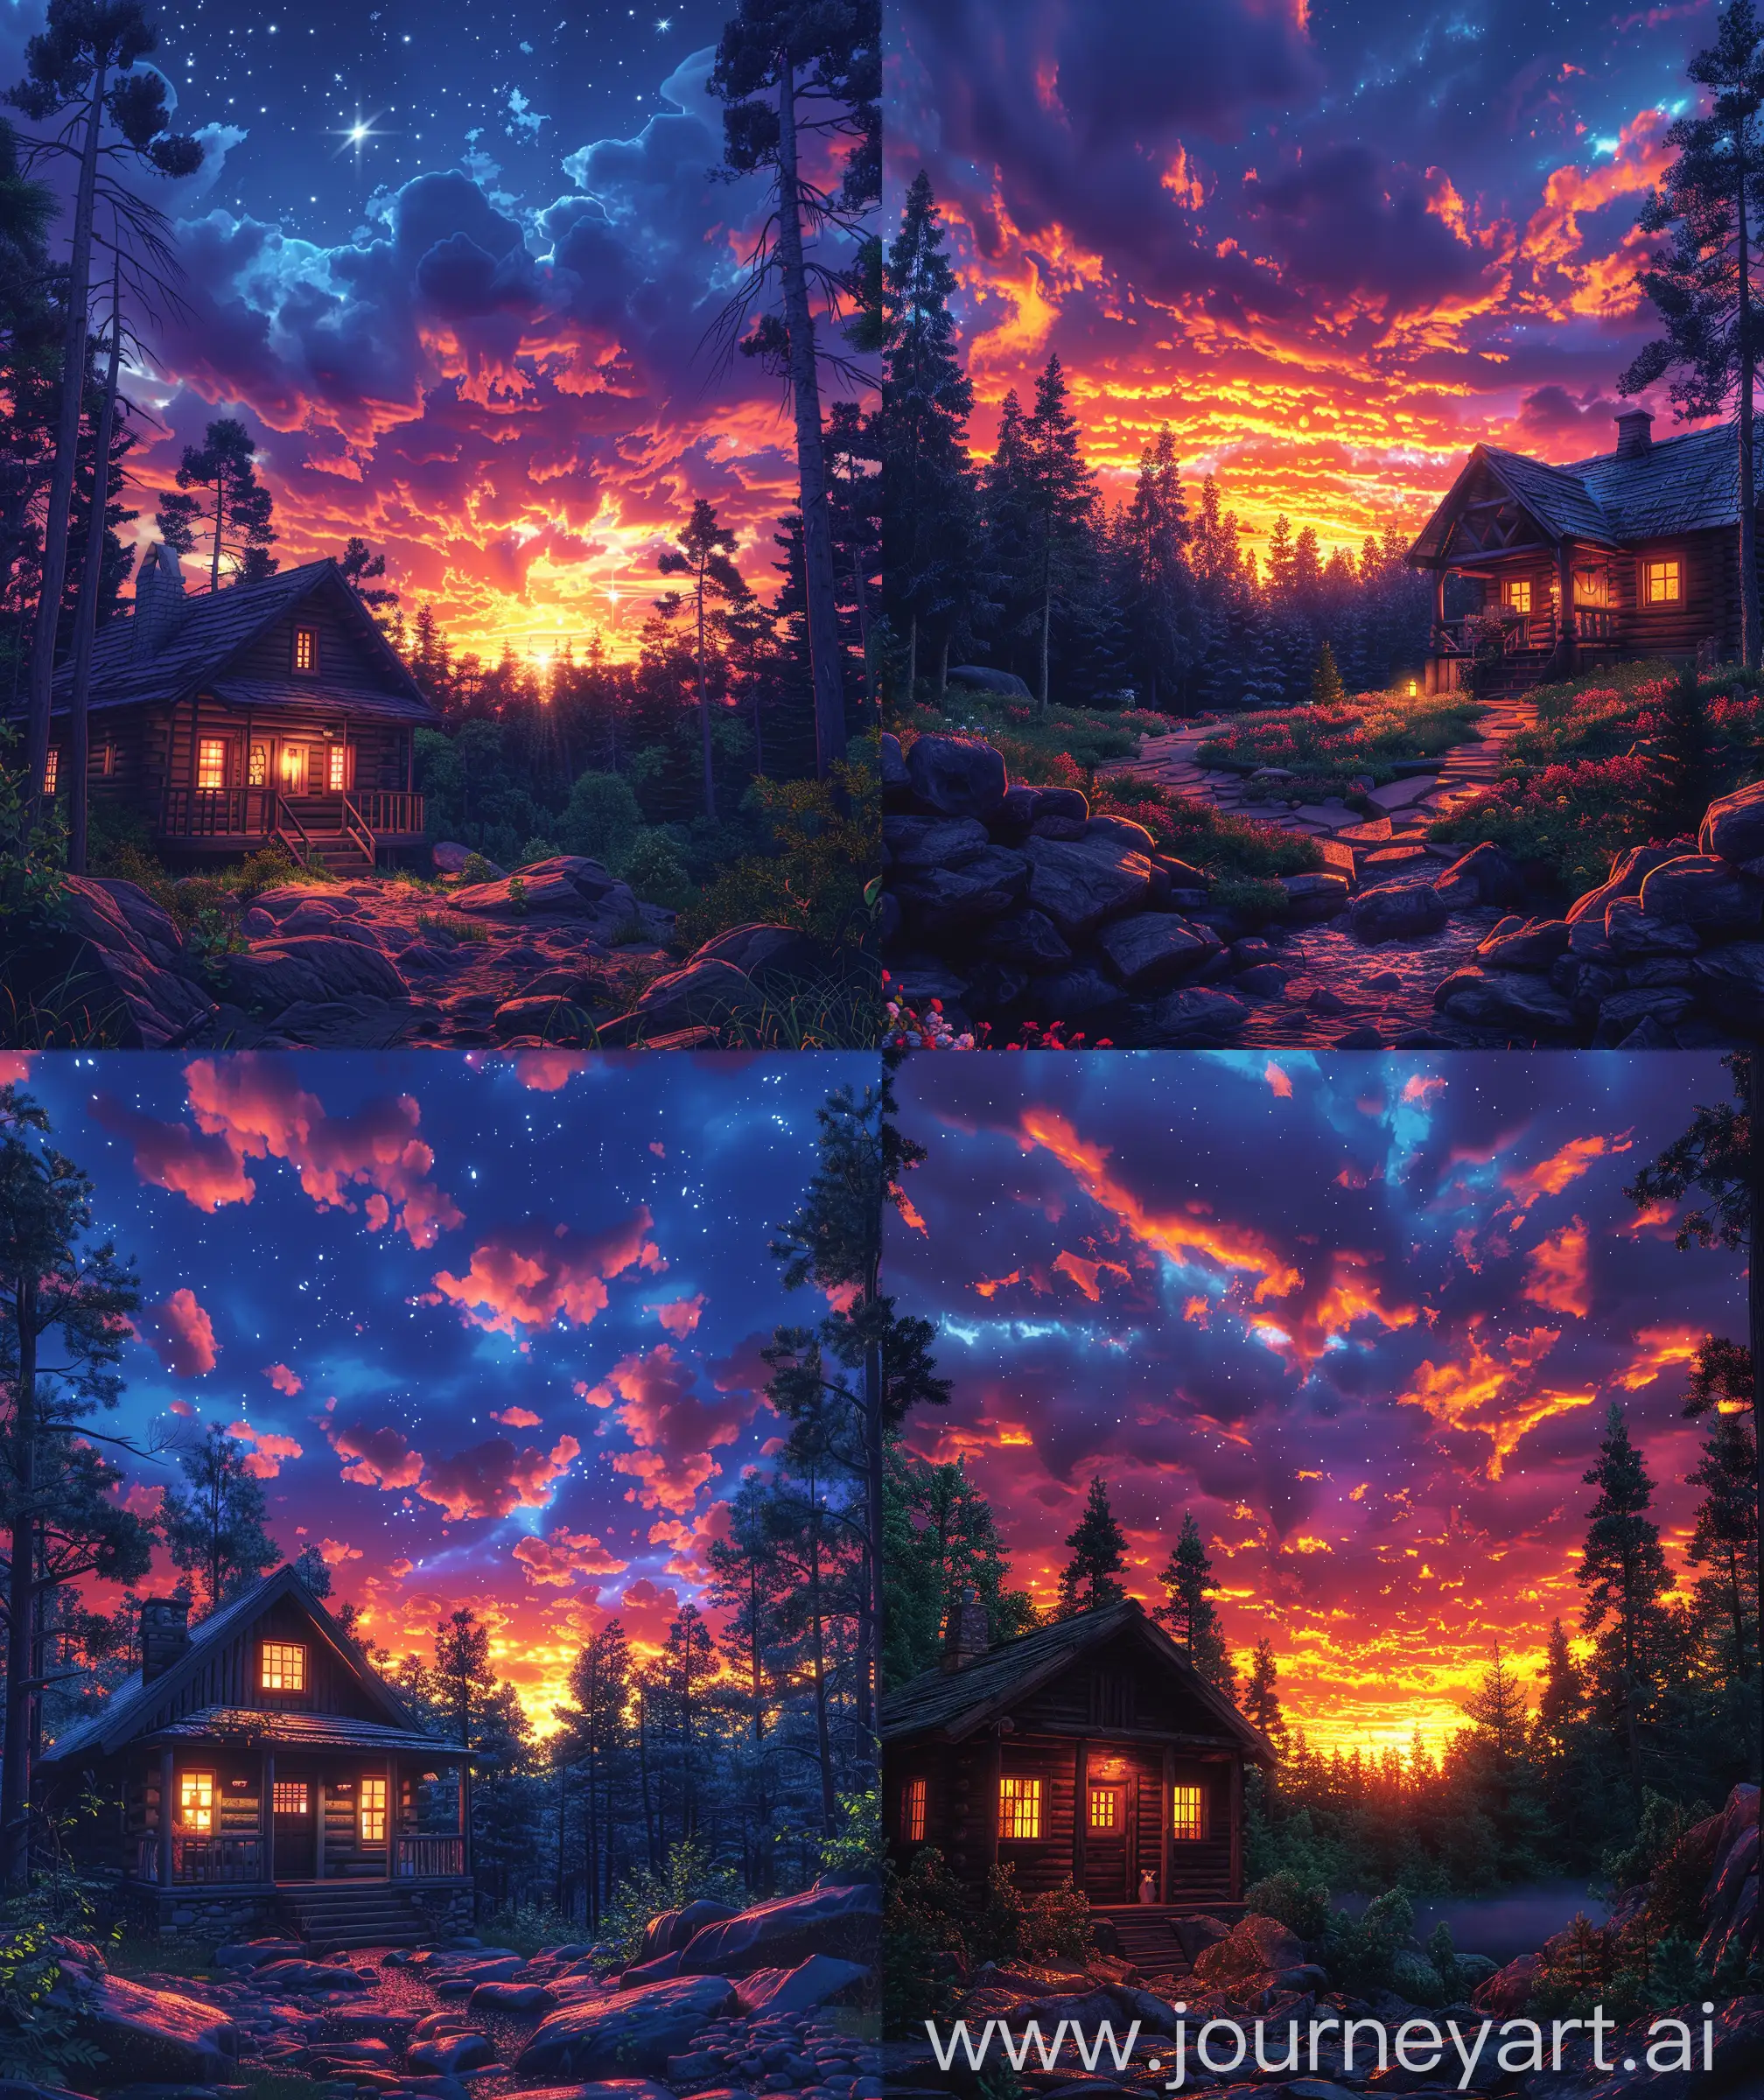 Lofi-Anime-Art-Cabin-in-Enchanting-Spring-Night-under-Vibrant-Sunset-Sky